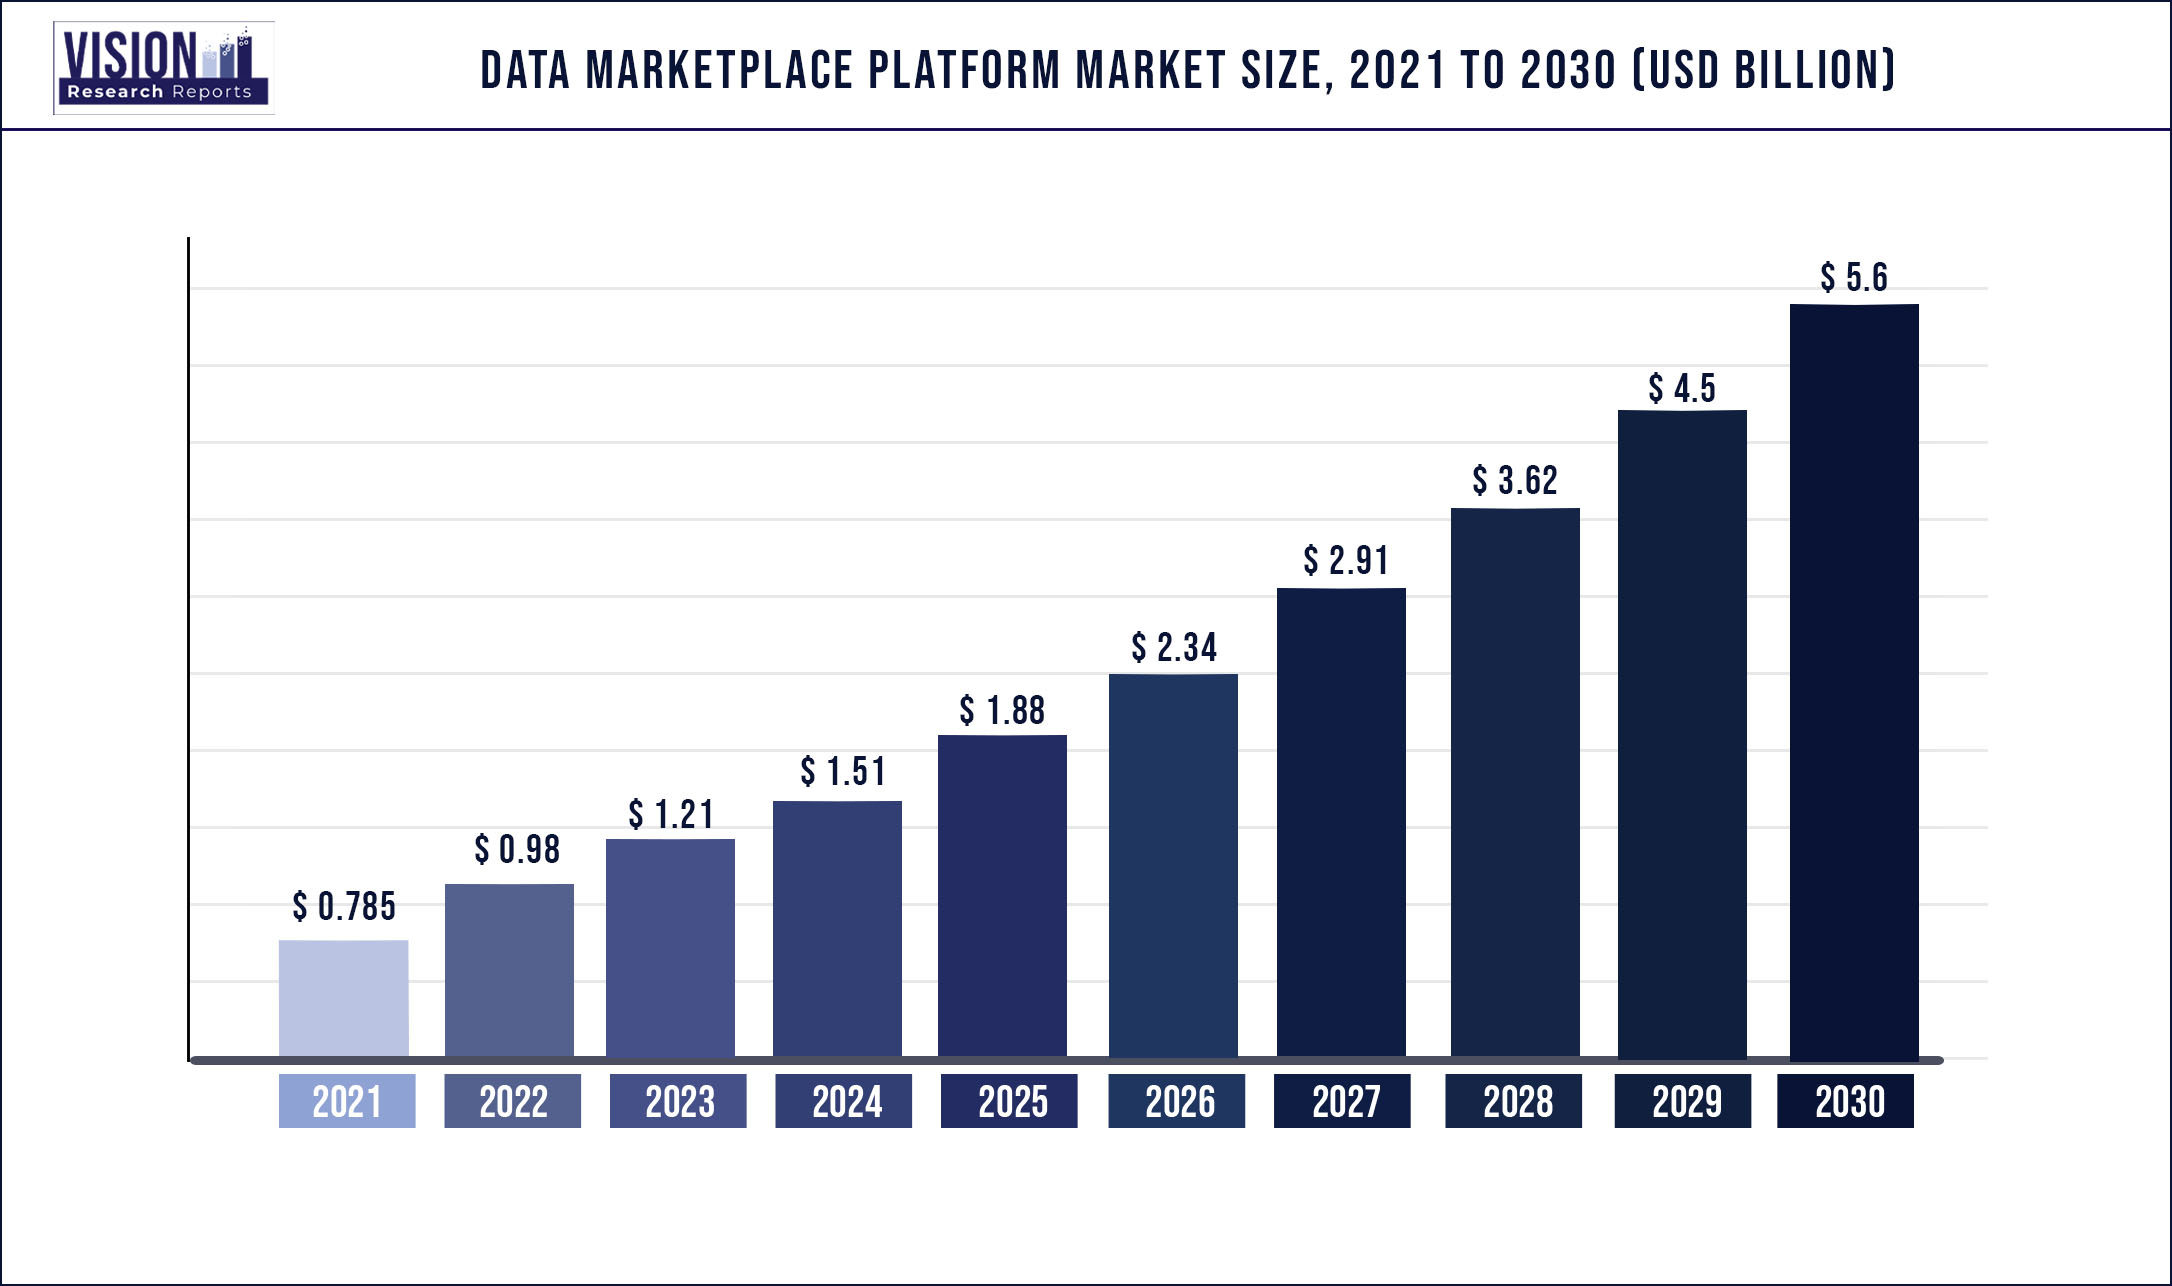 Data Marketplace Platform Market Size 2021 to 2030